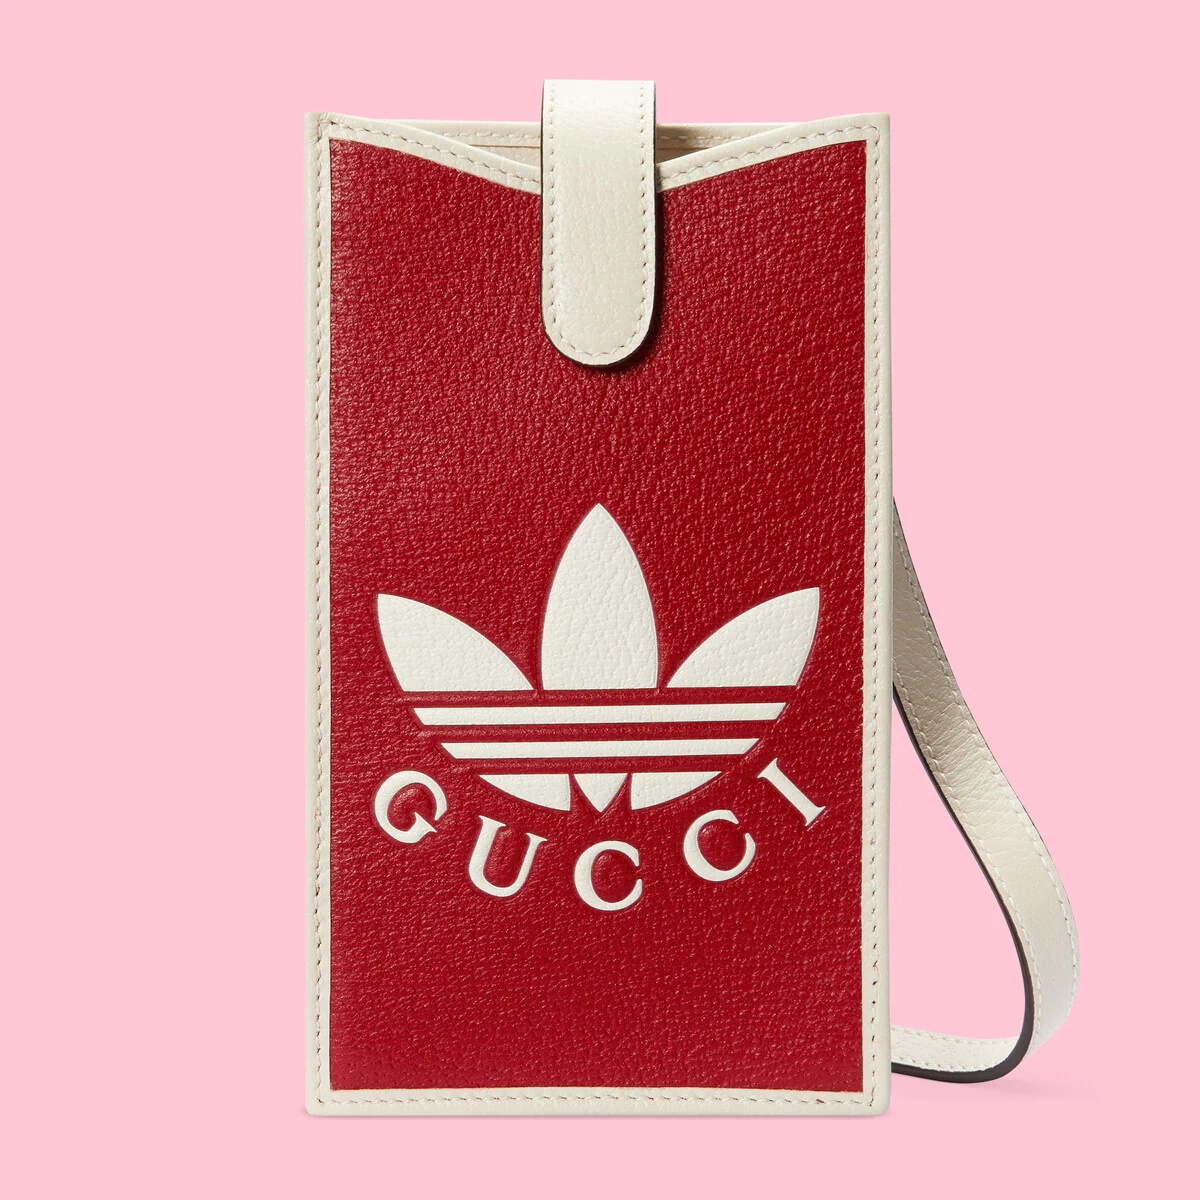 adidas x Gucci phone case - 1